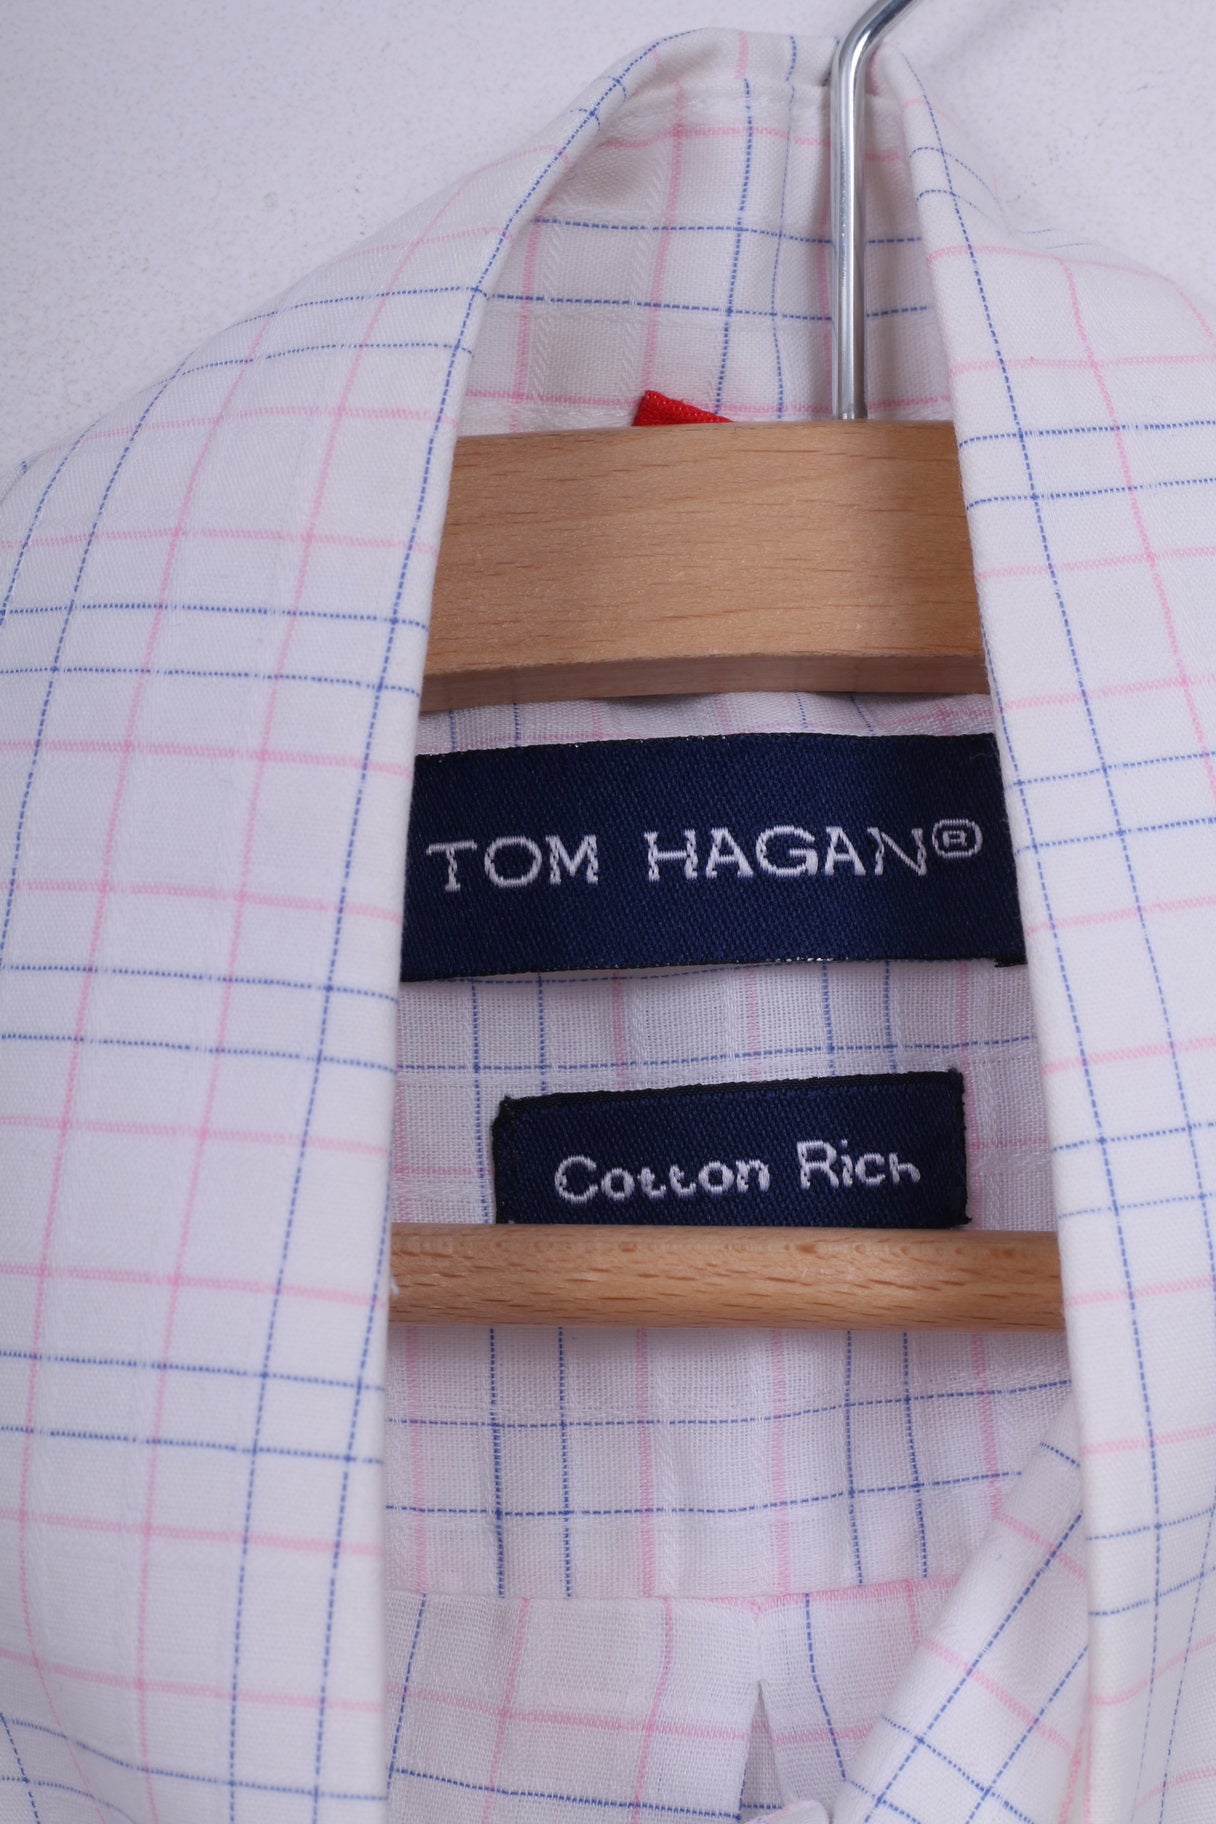 Tom Hagan Mens M 39/40 Casual Shirt White Check Short Sleeve Cotton Rich Summer Top